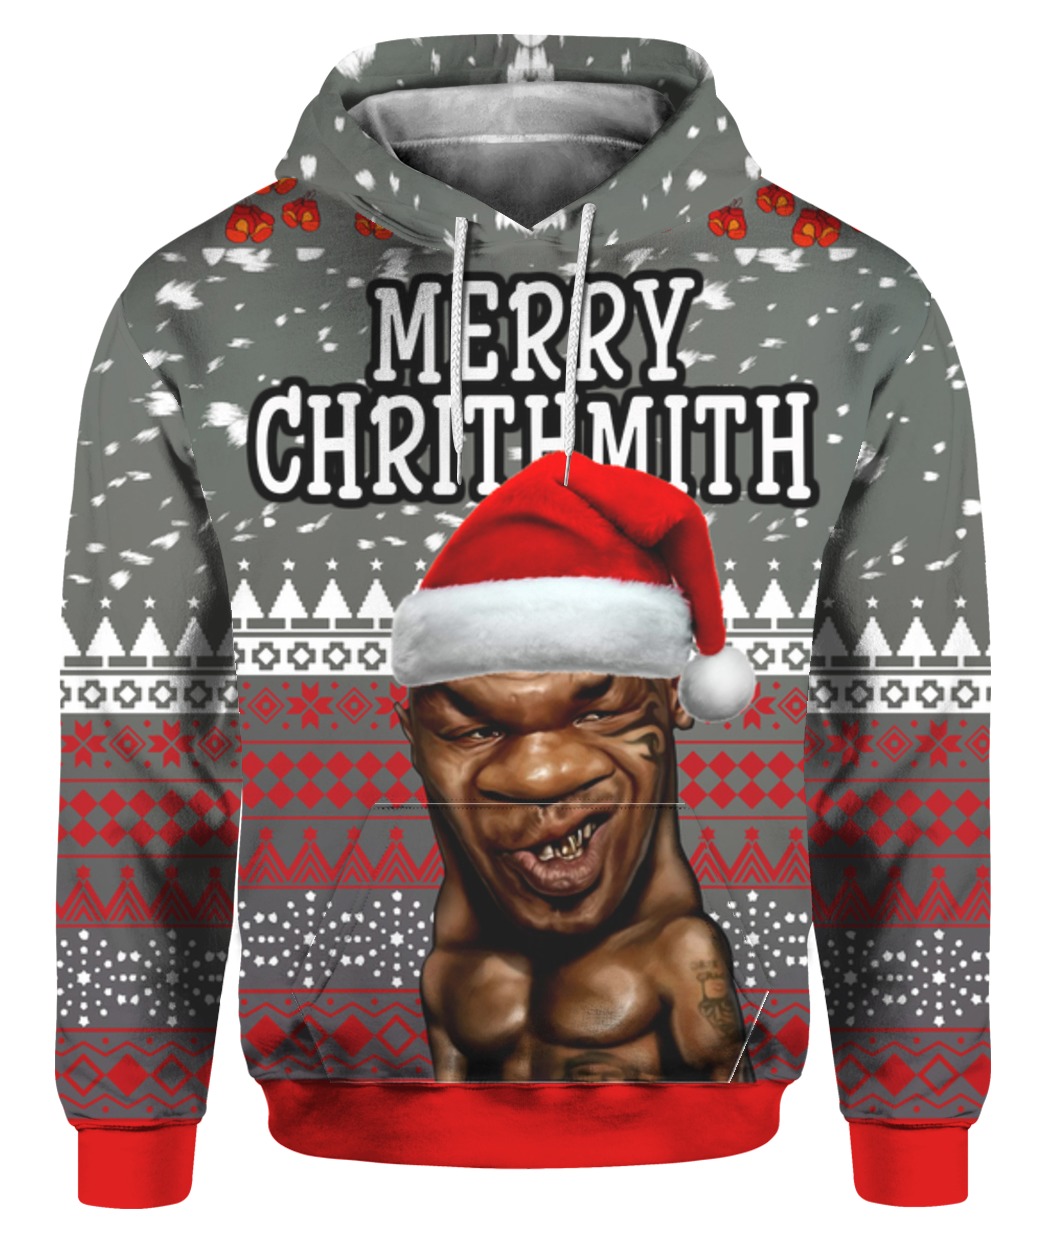 Mike Tyson Merry chrithmith Cuello Redondo Sudadera Ugly Christmas Sweater X-mas